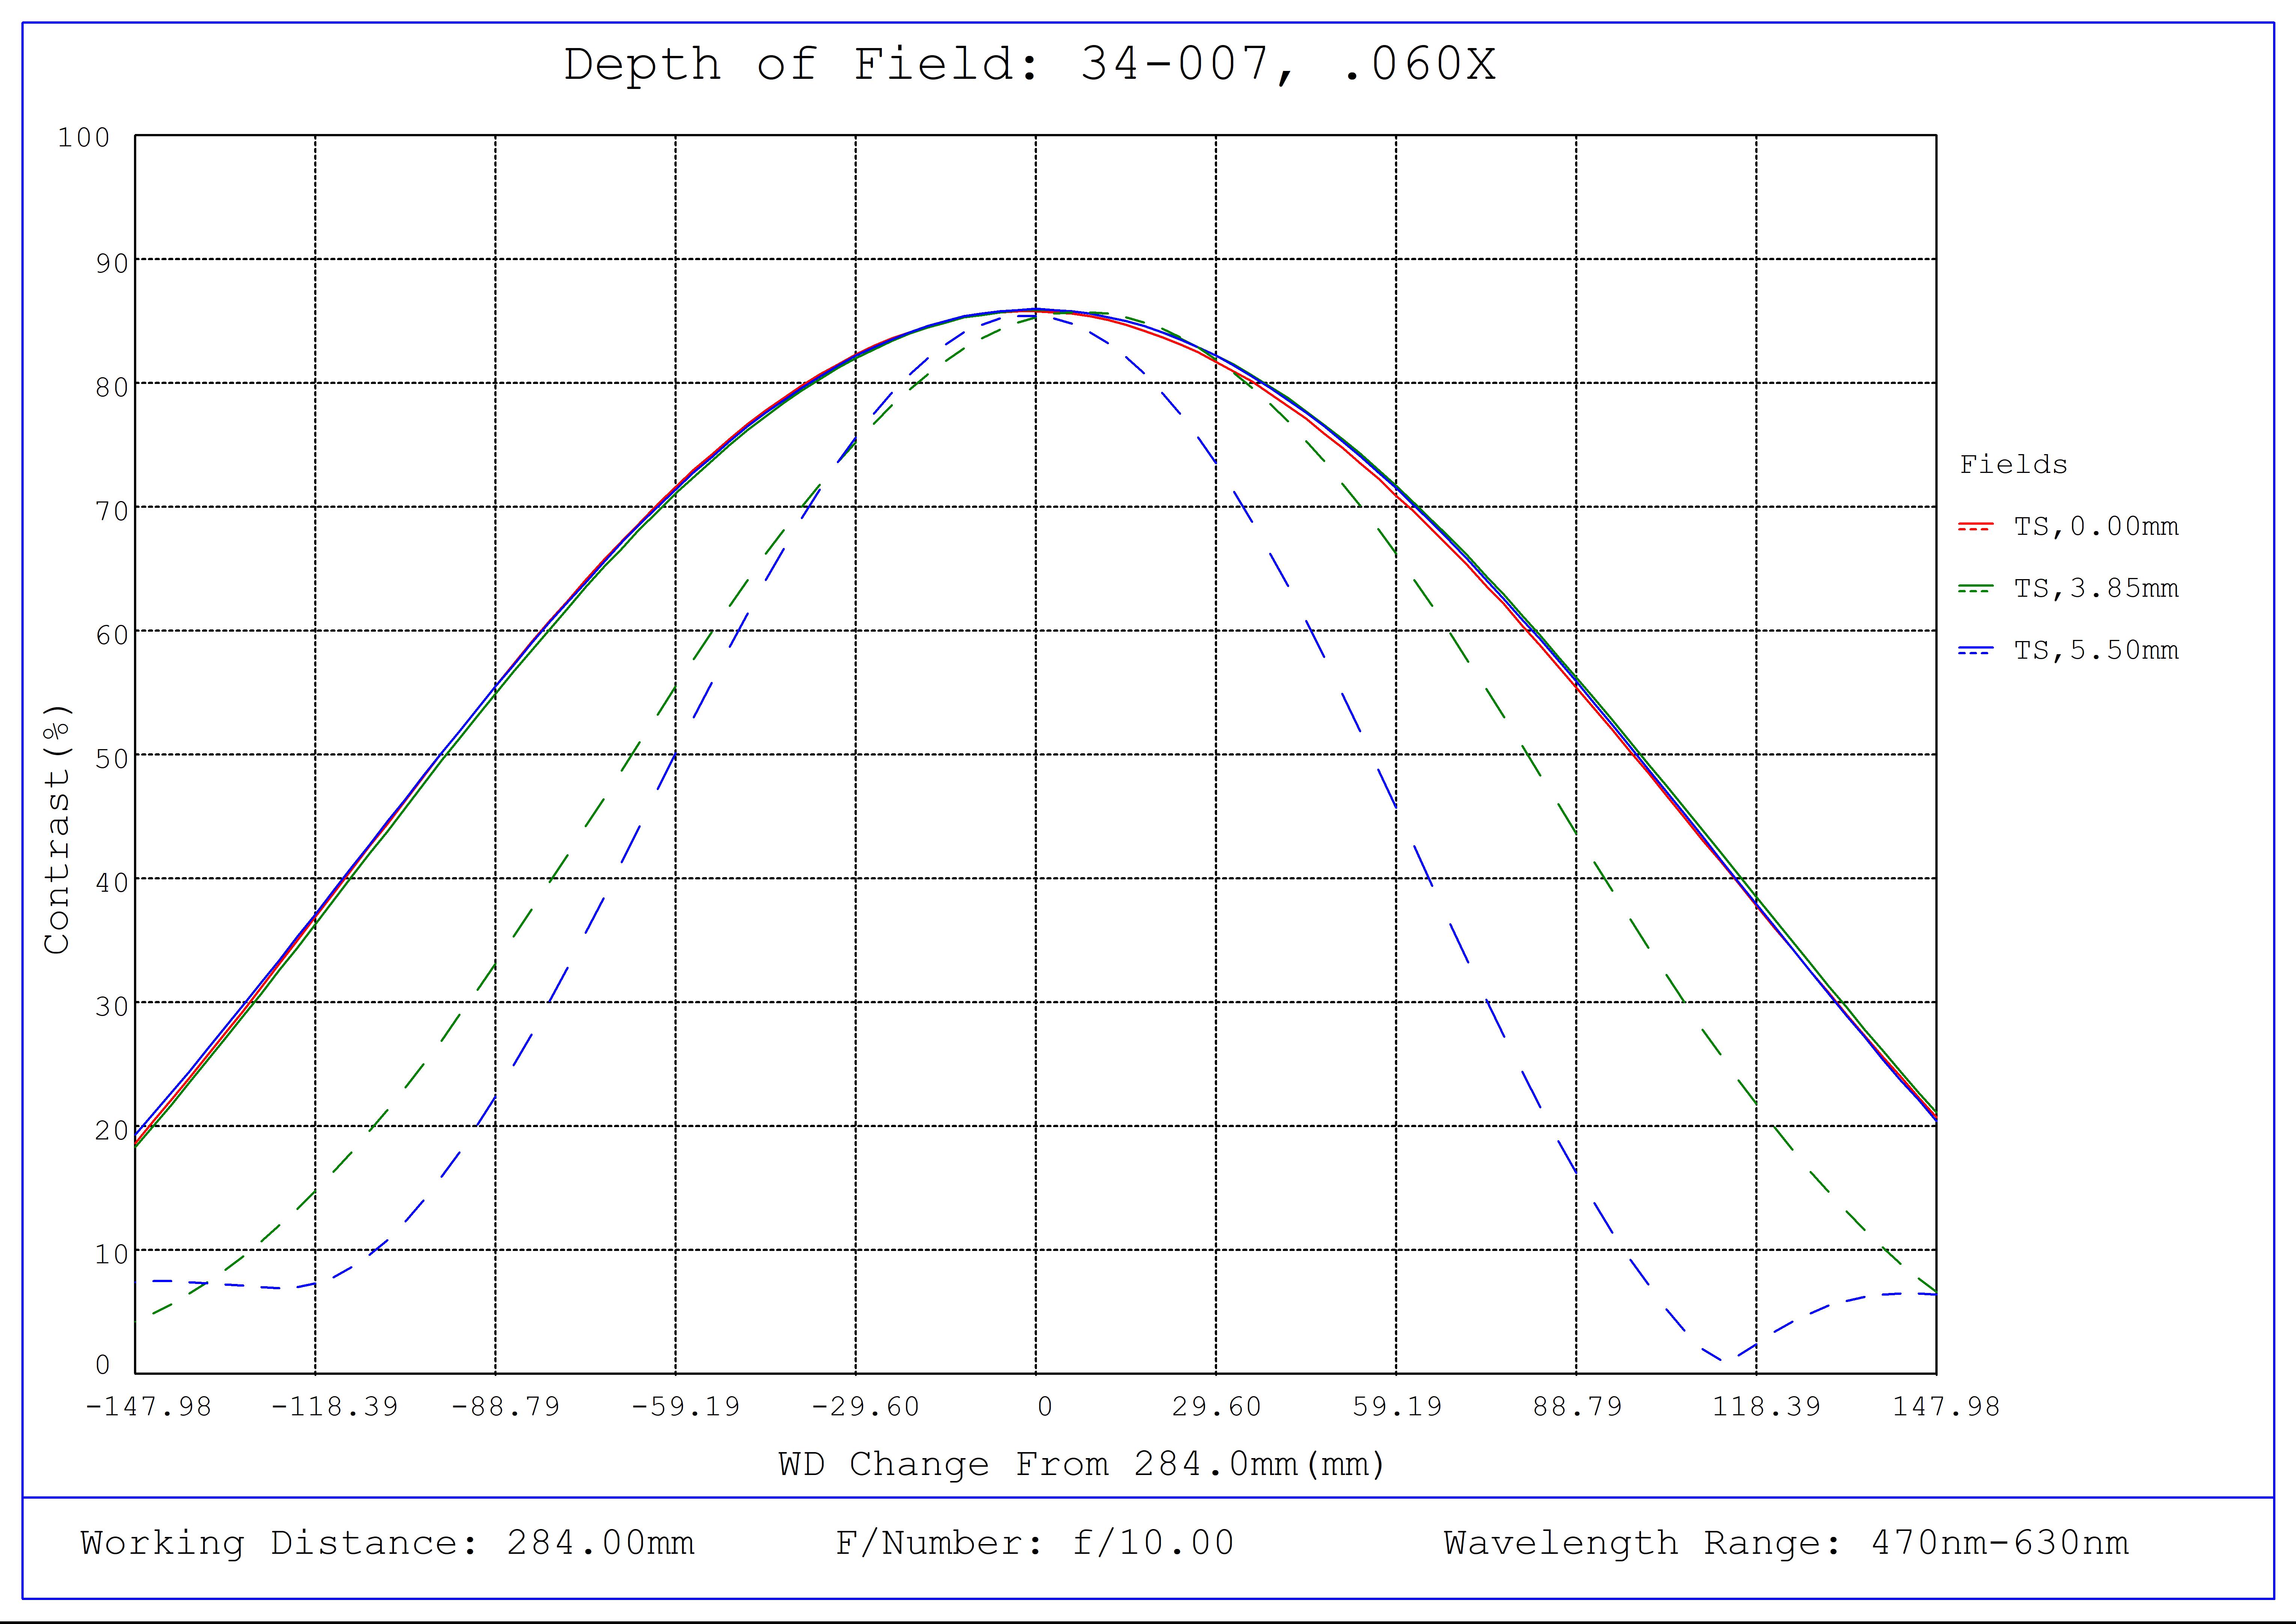 #34-007, 0.060X, 2/3" C-Mount TitanTL® Telecentric Lens, Depth of Field Plot, 284mm Working Distance, f10